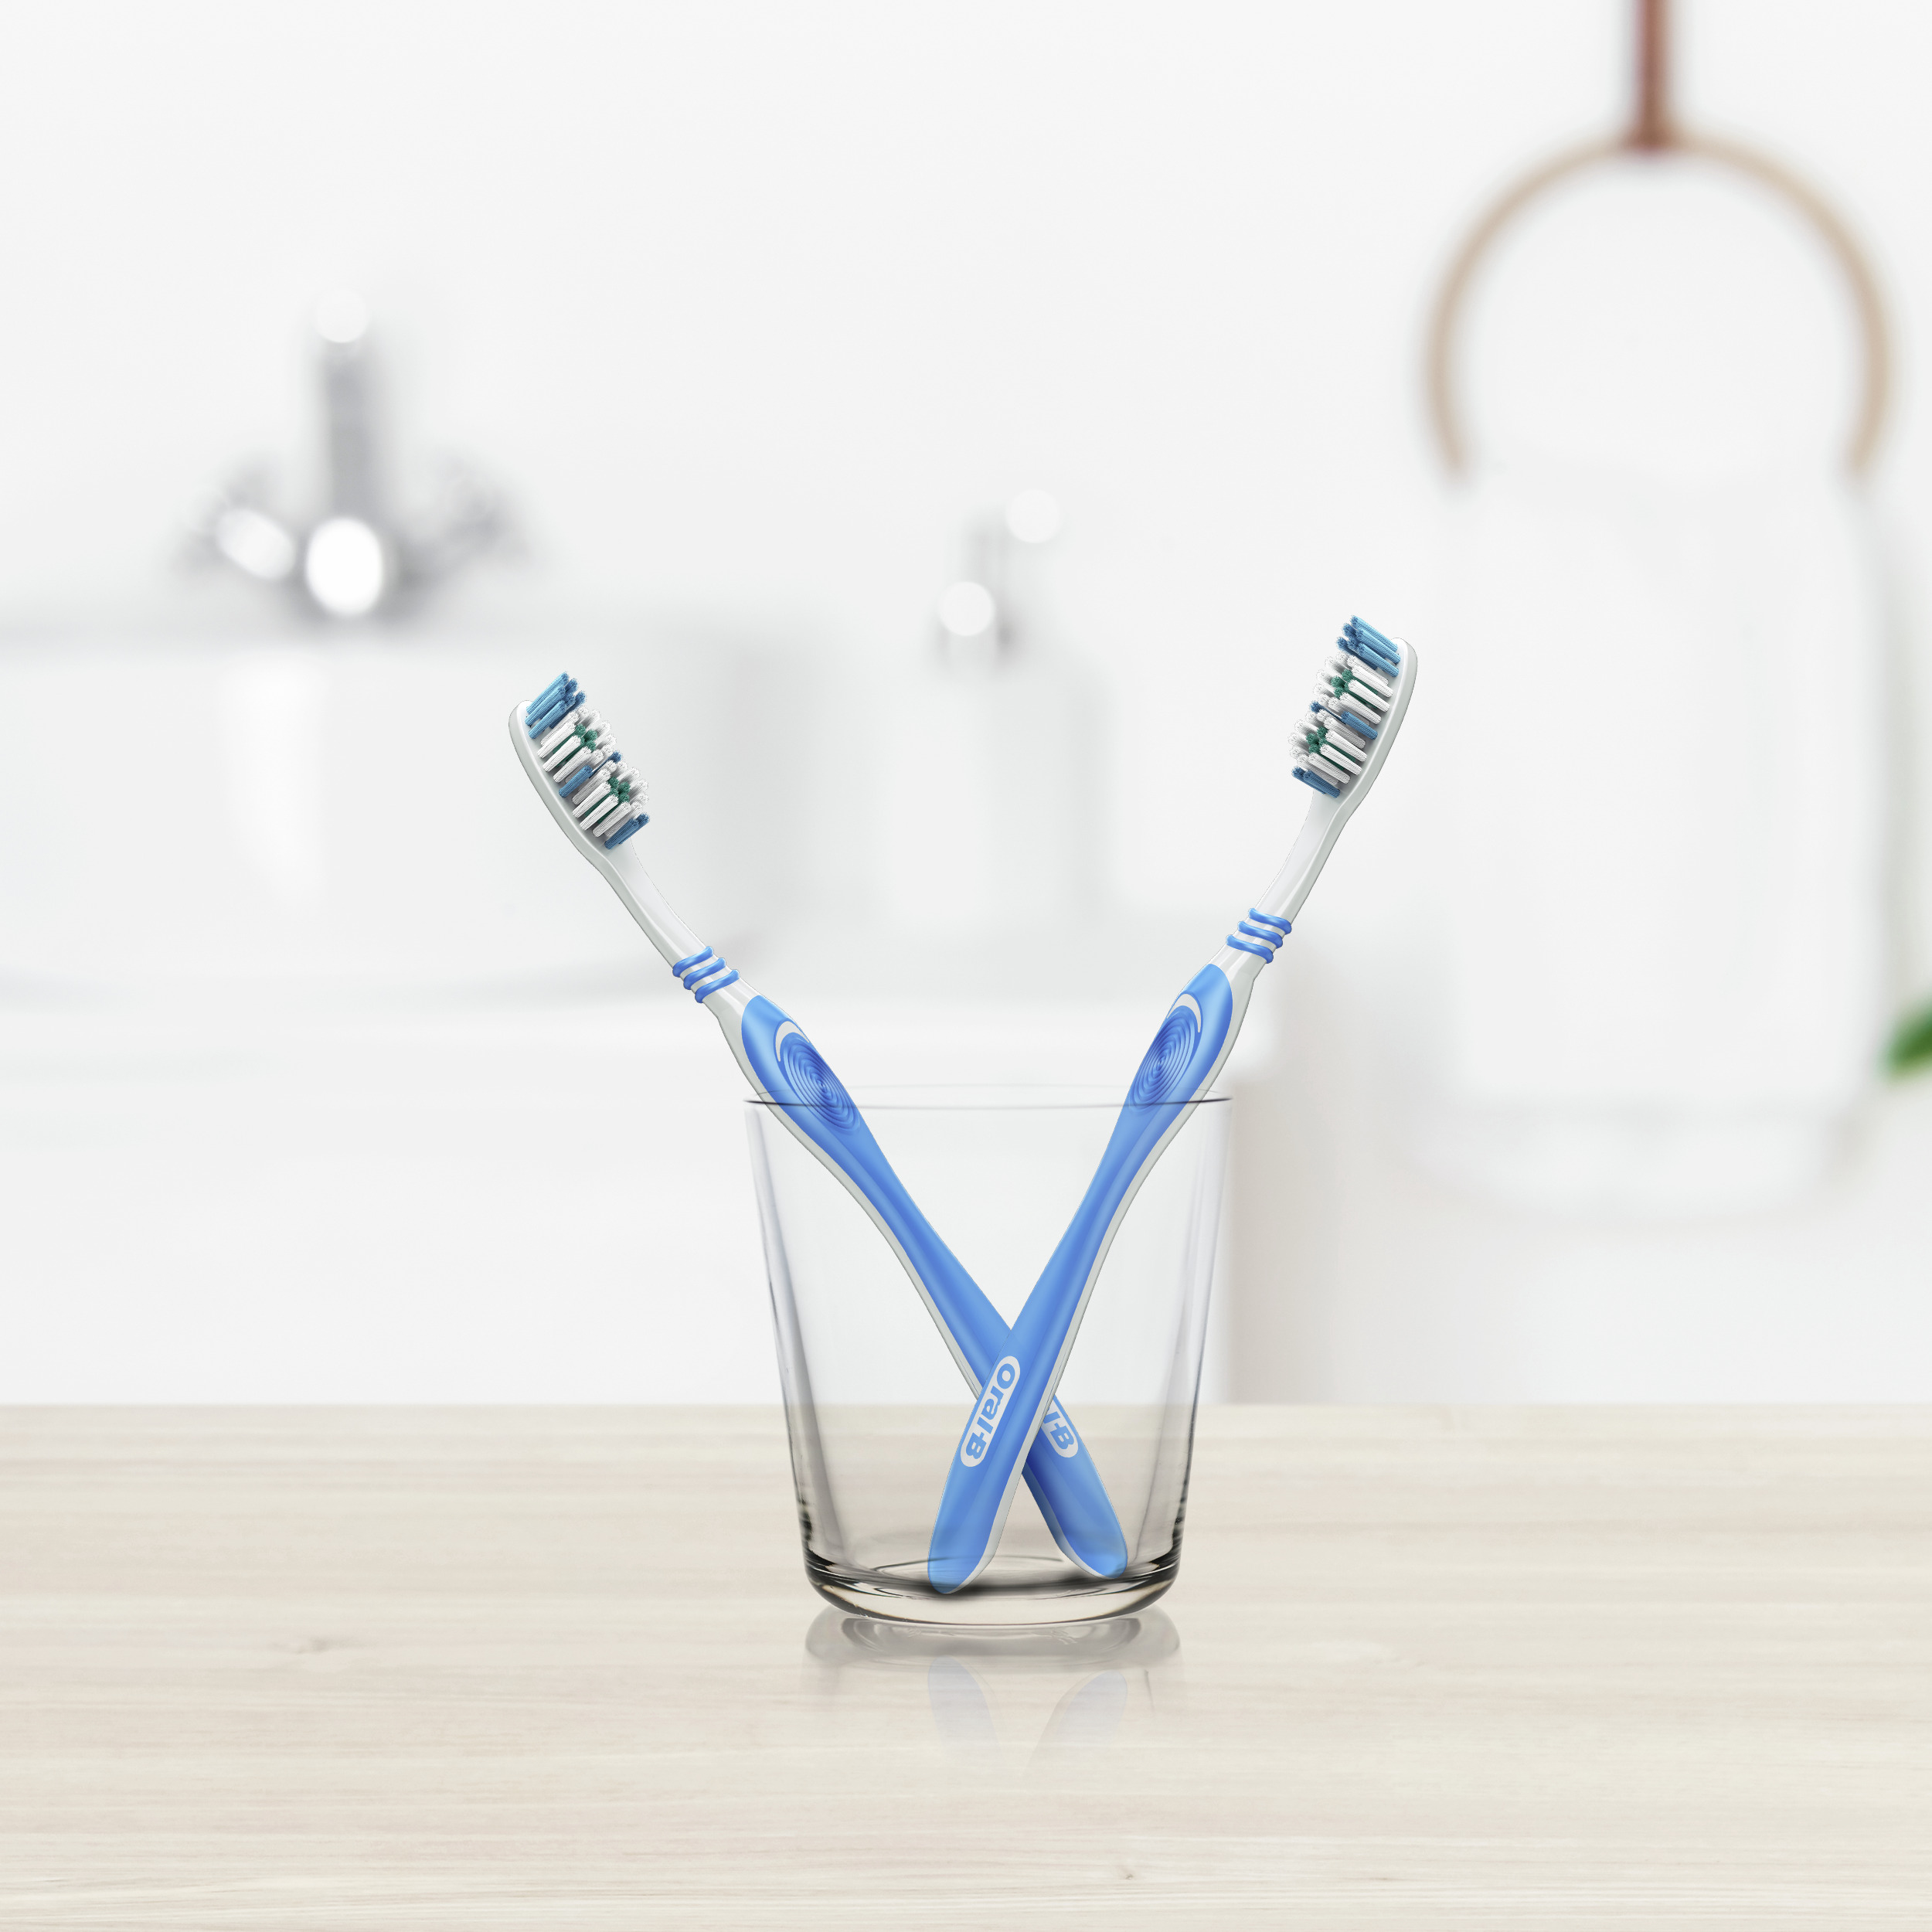 Cepillo Dental Oral-B Complete 2 Unid - Clean Queen